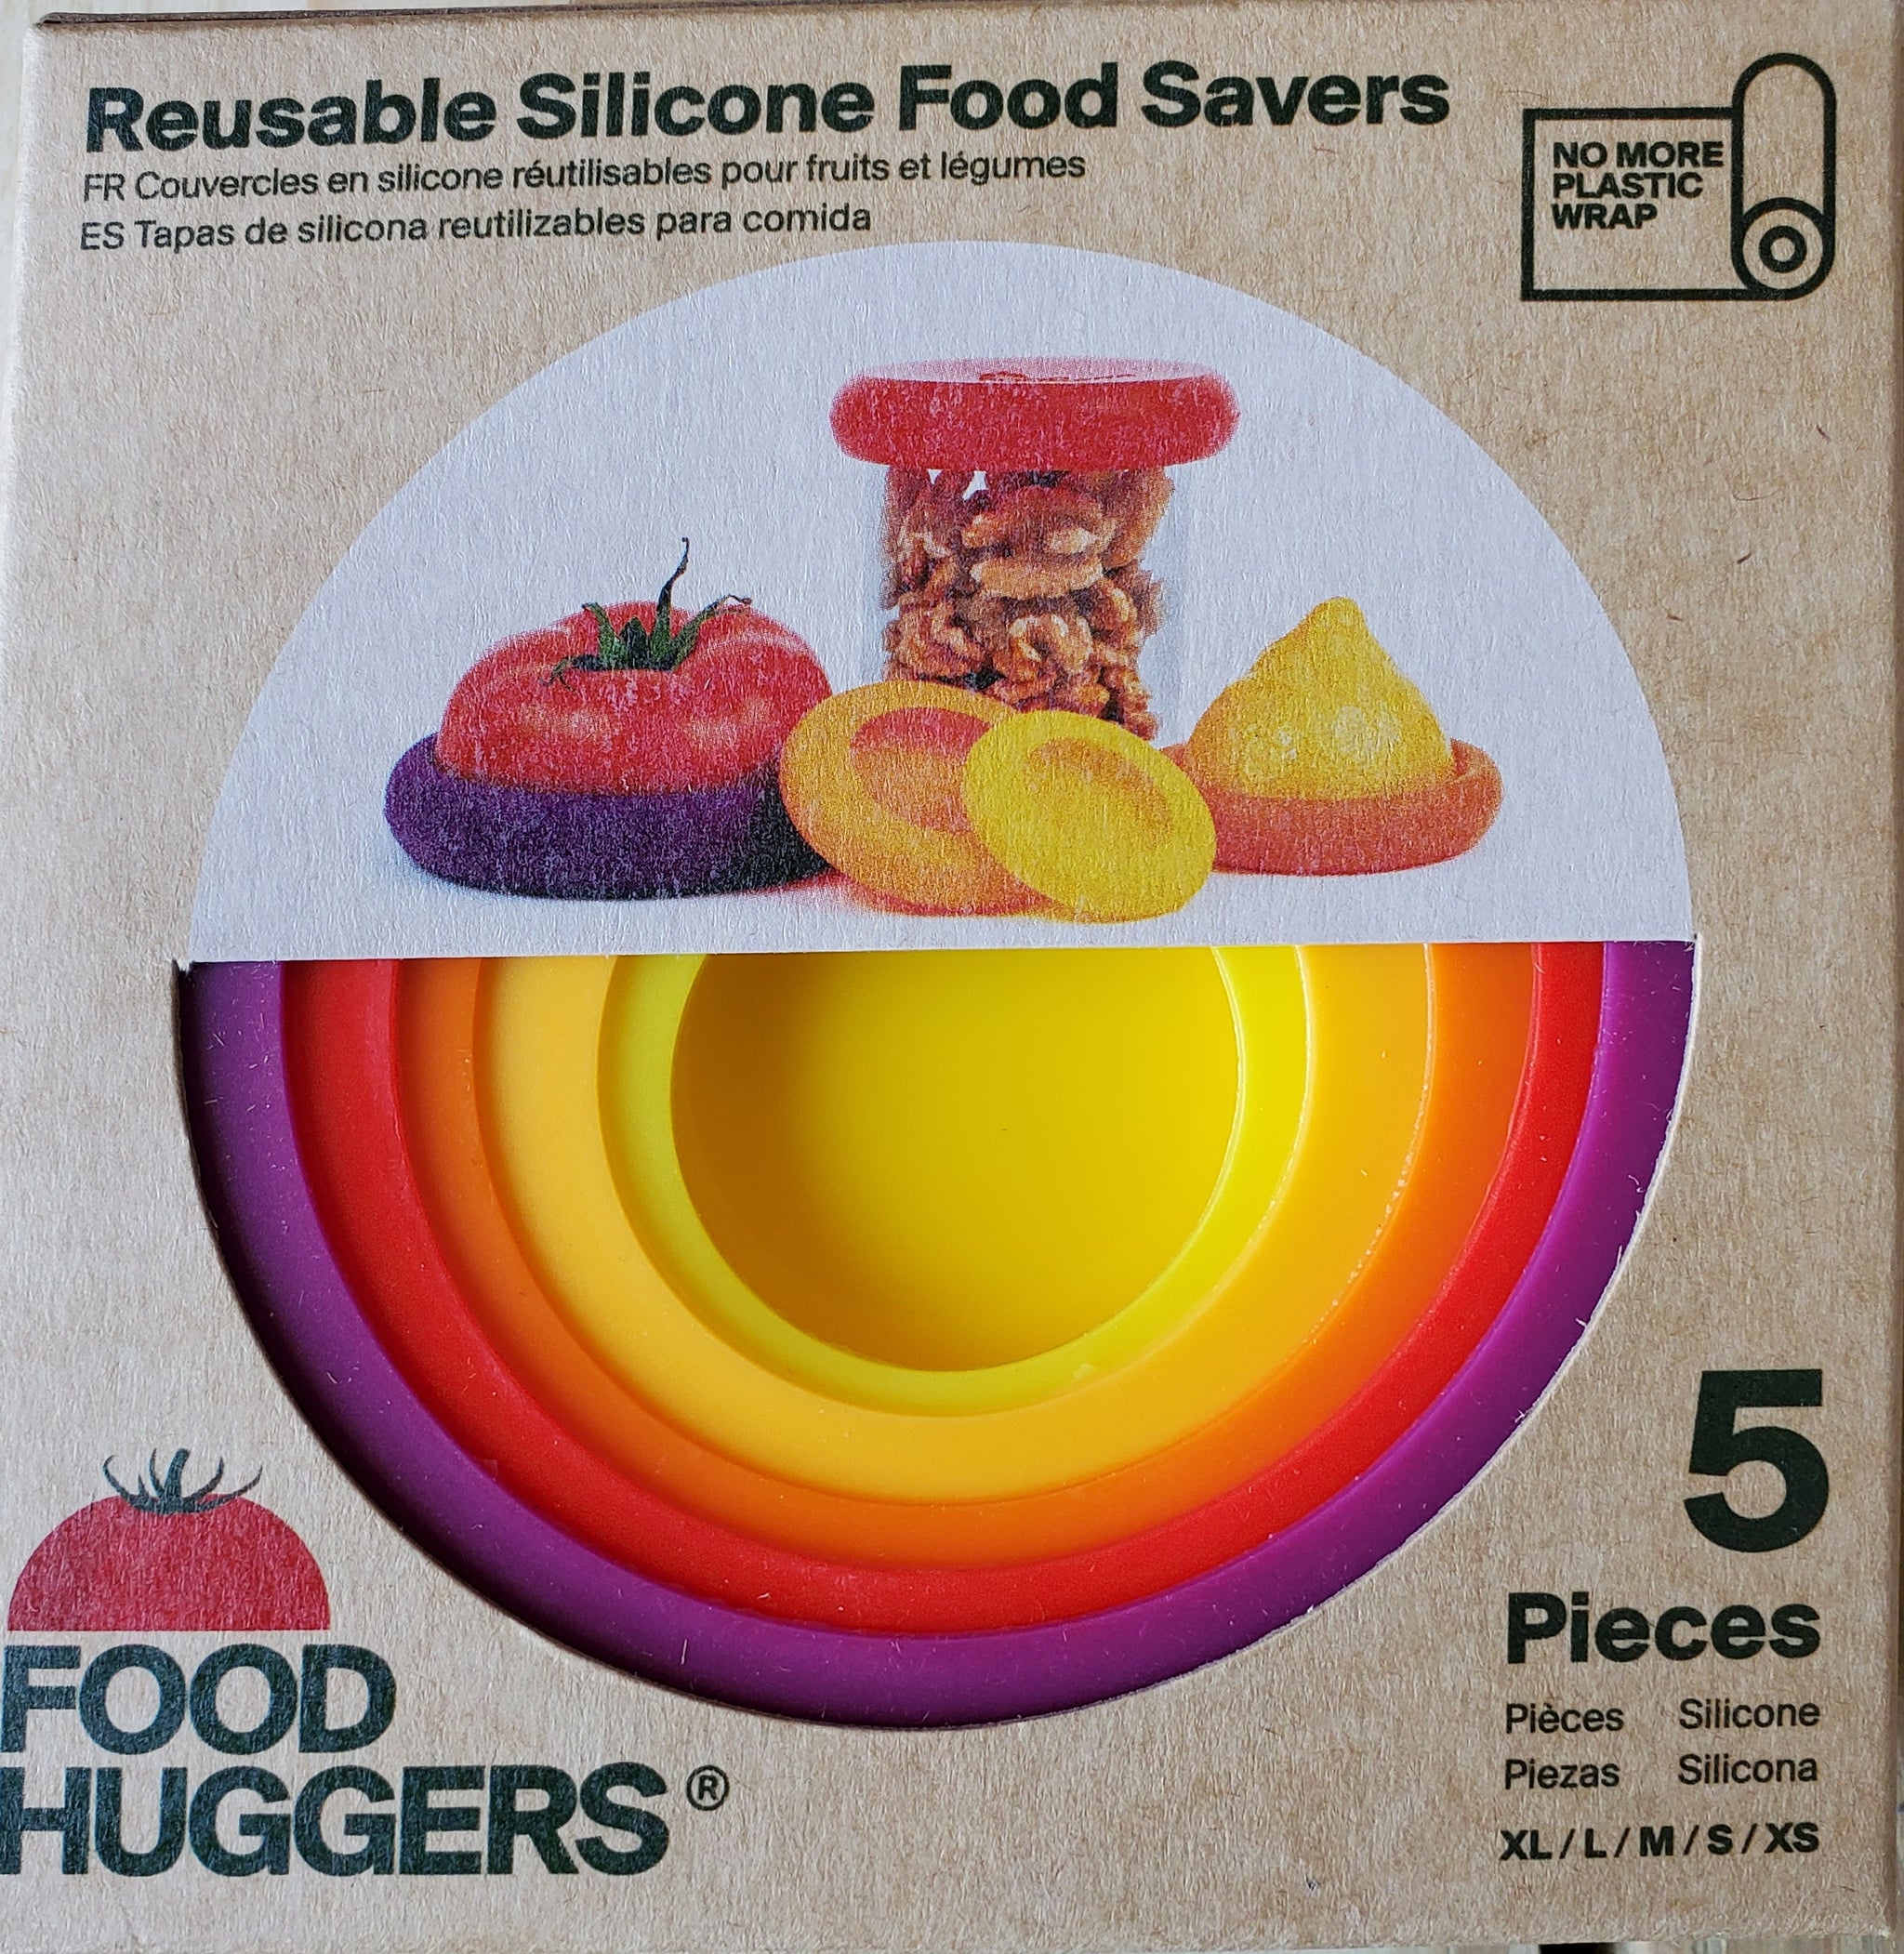 Food Huggers - 5 pack